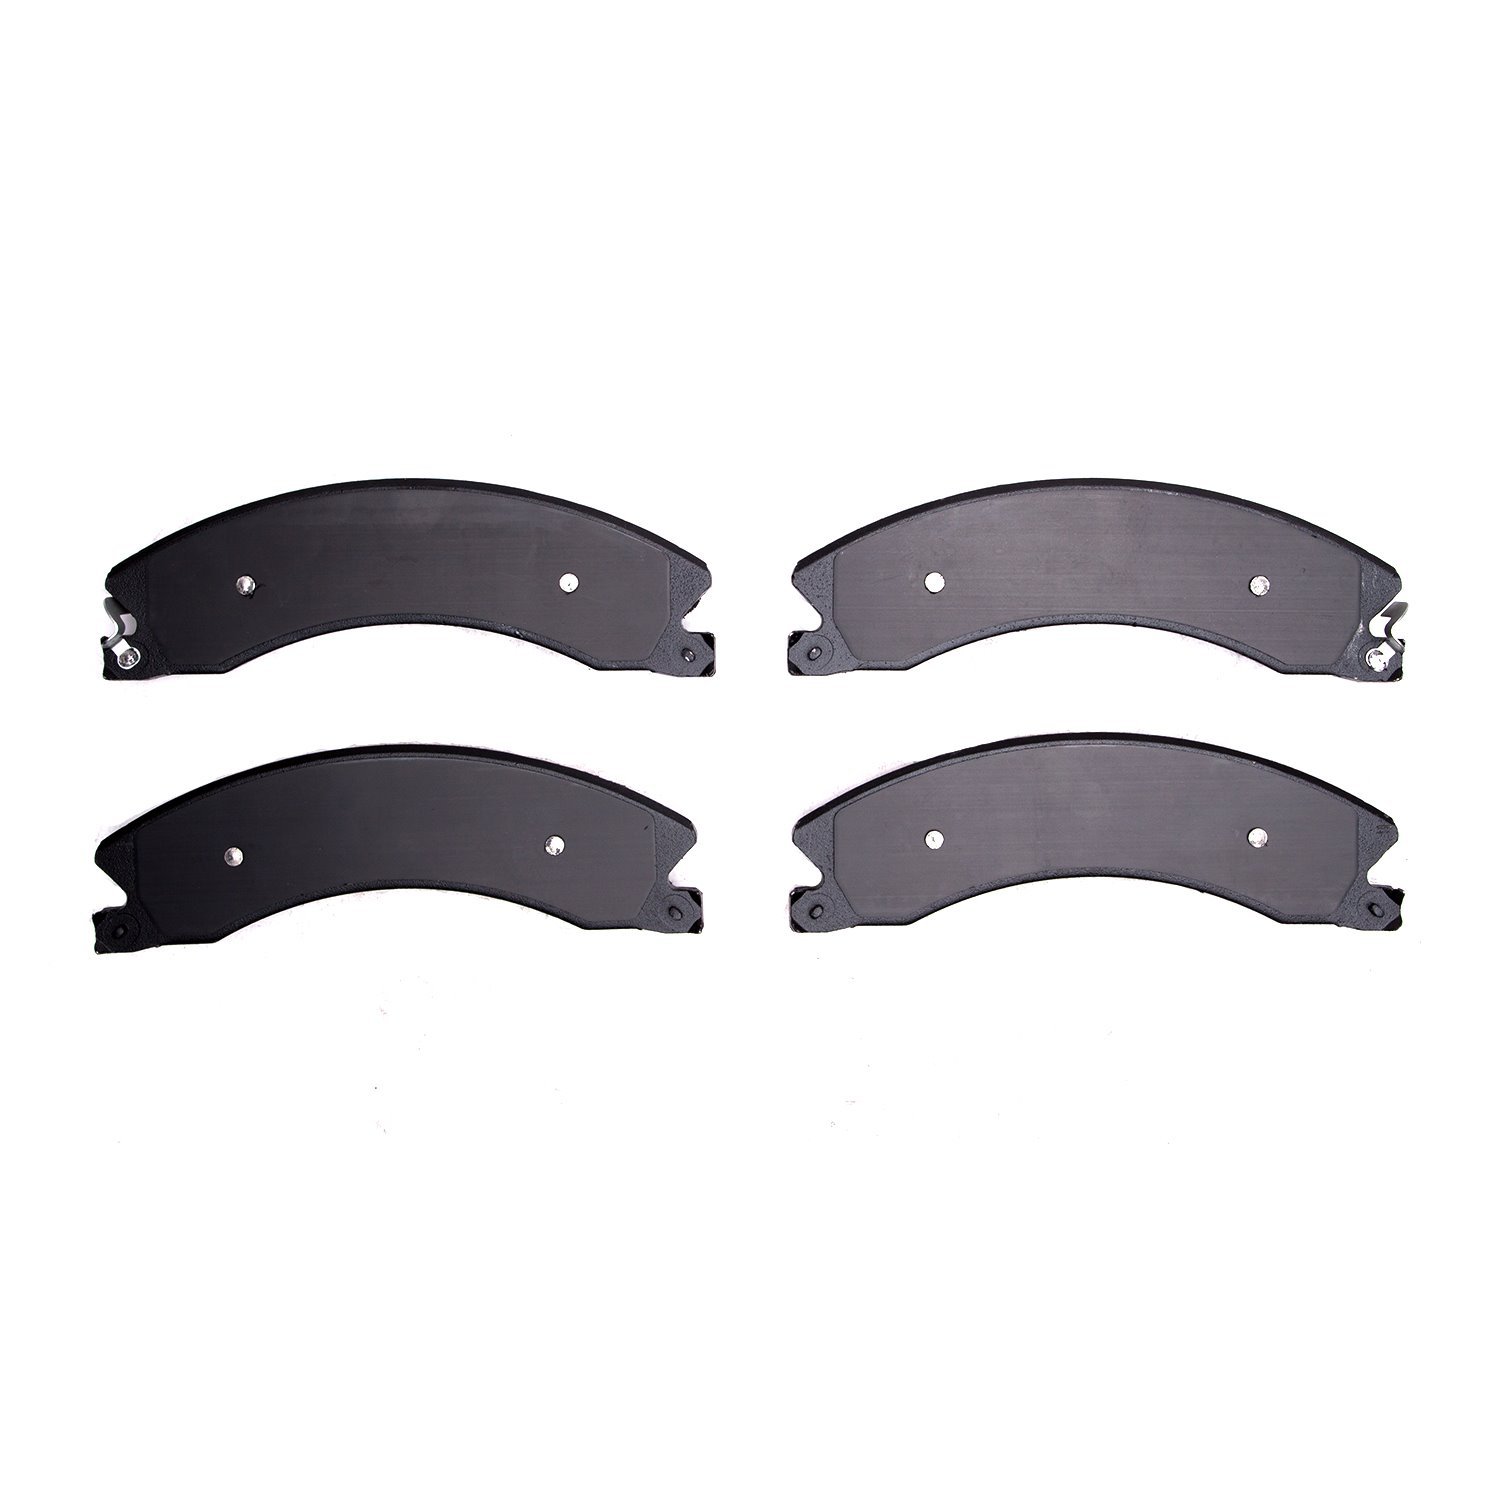 1551-1565-00 5000 Advanced Ceramic Brake Pads, Fits Select Multiple Makes/Models, Position: Front,Fr,Rear,Rr